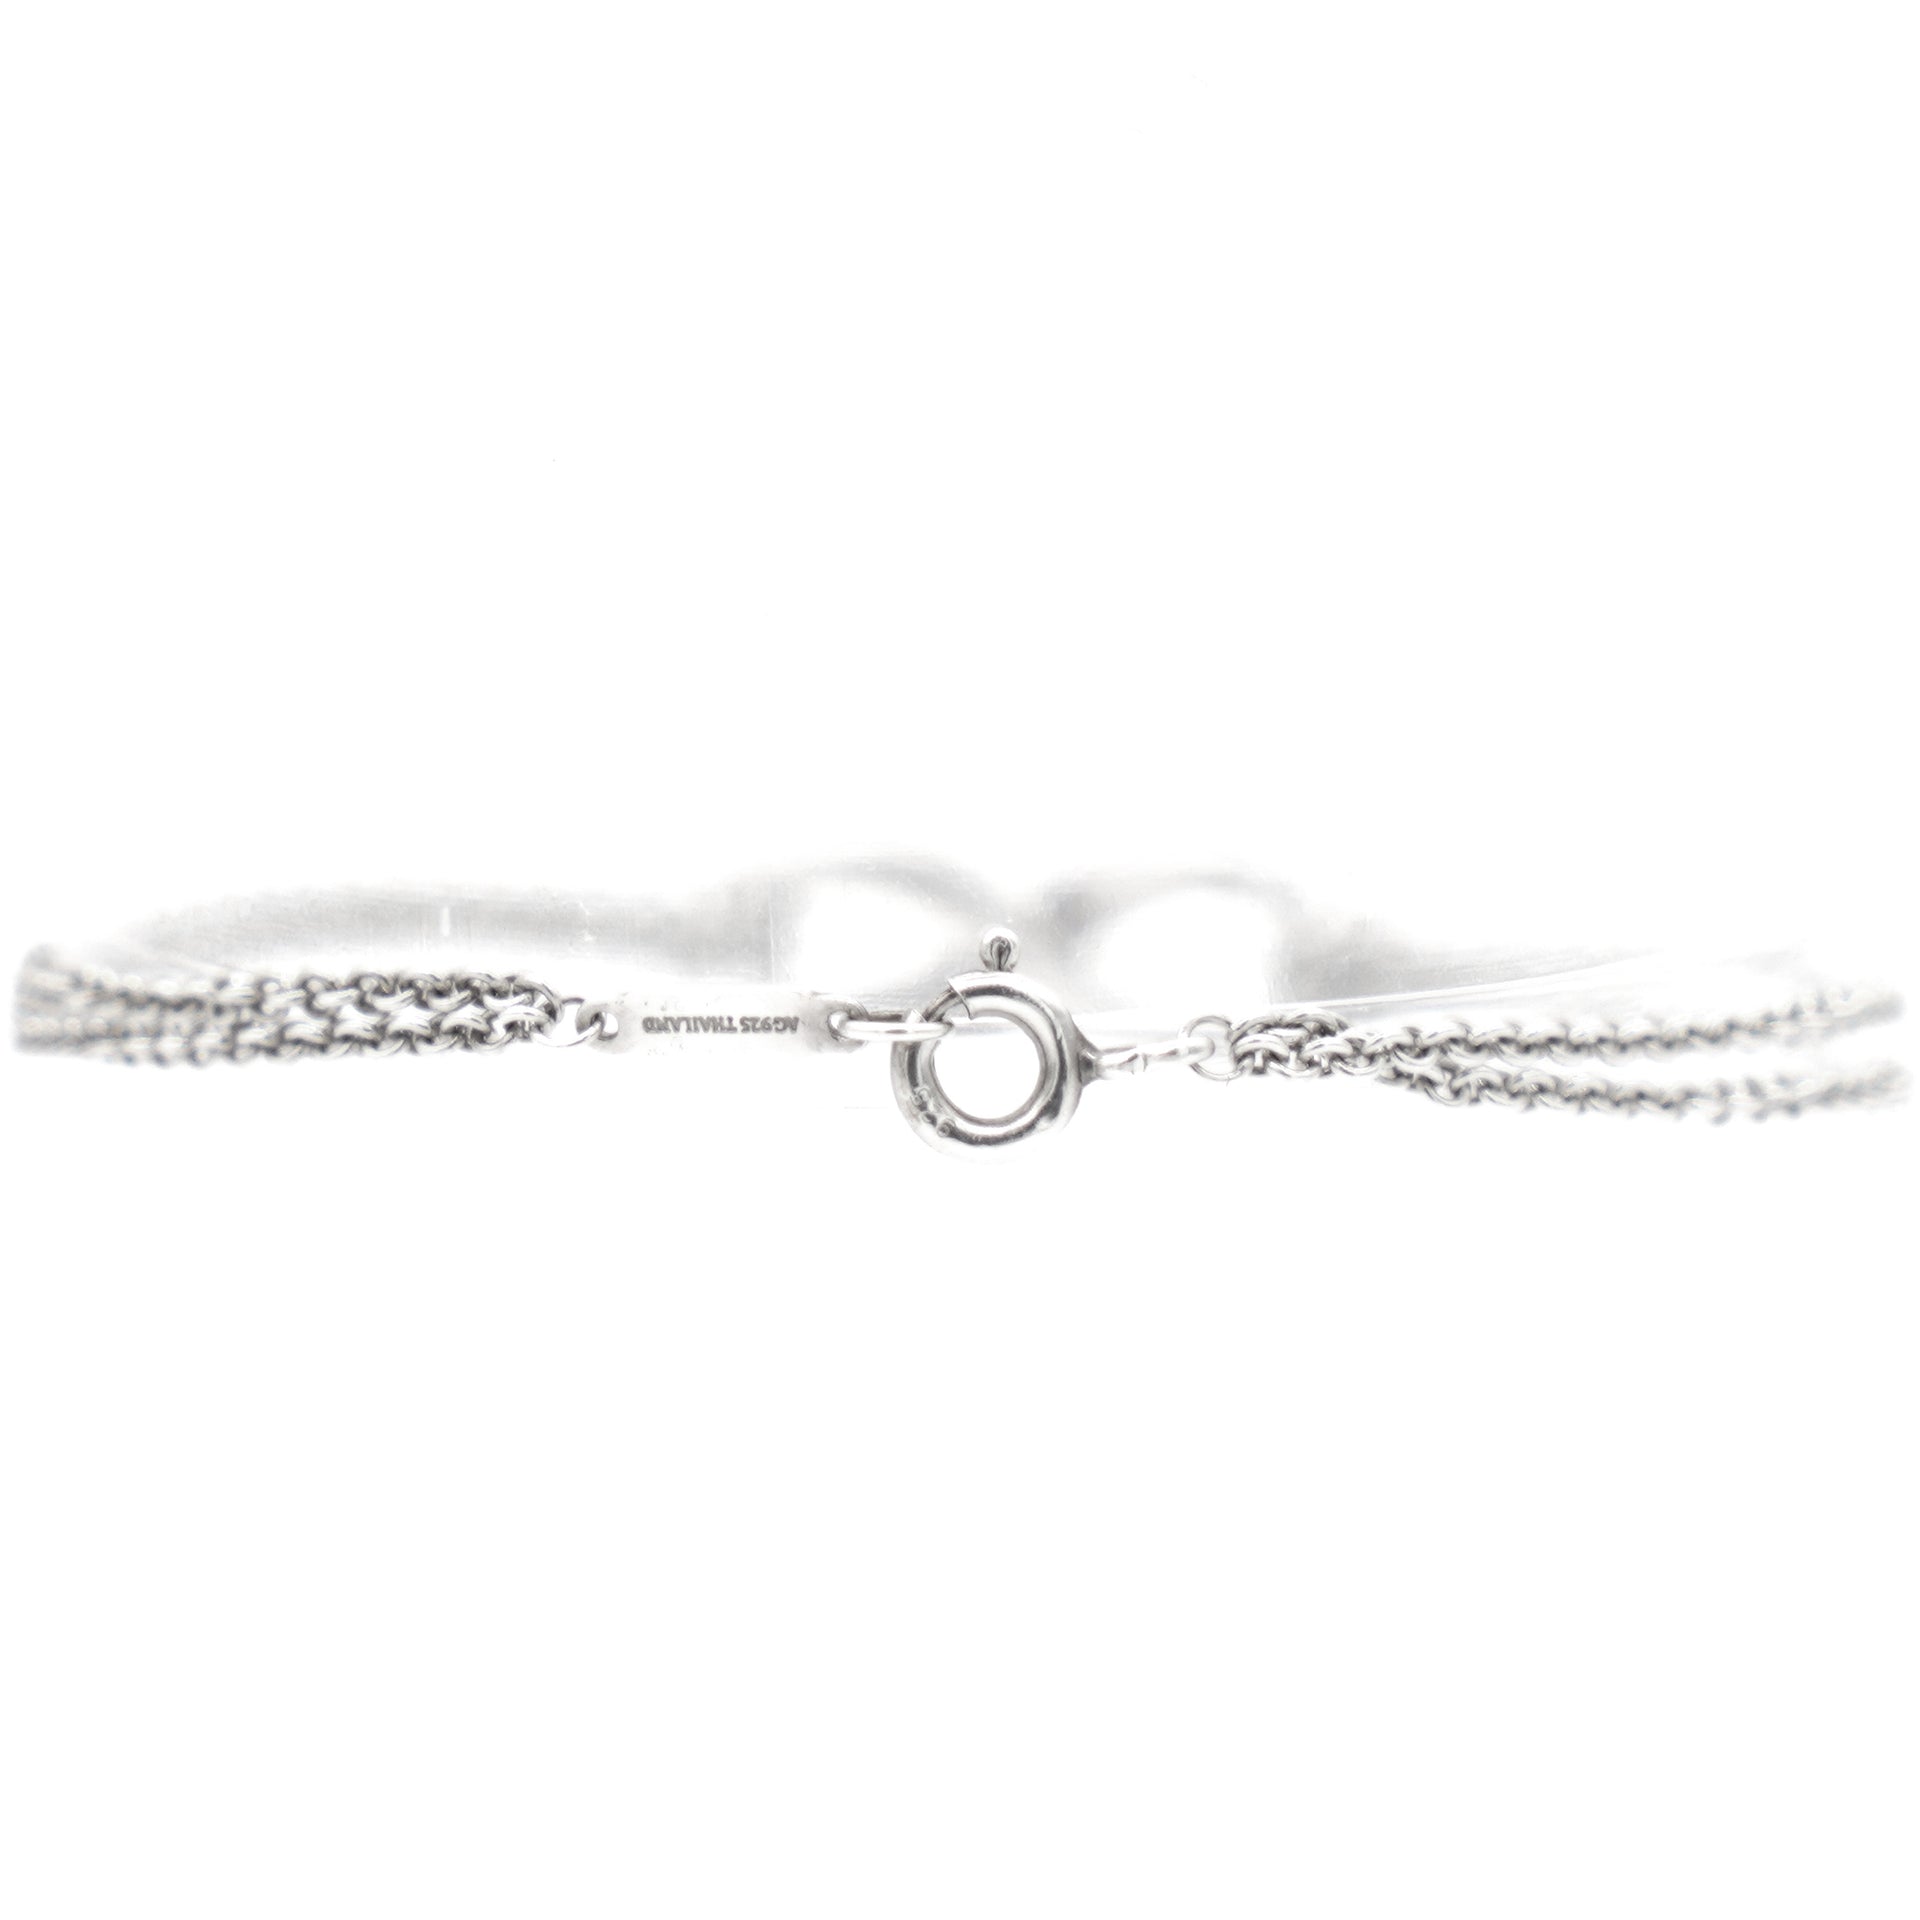 Silver Infinity Bracelet